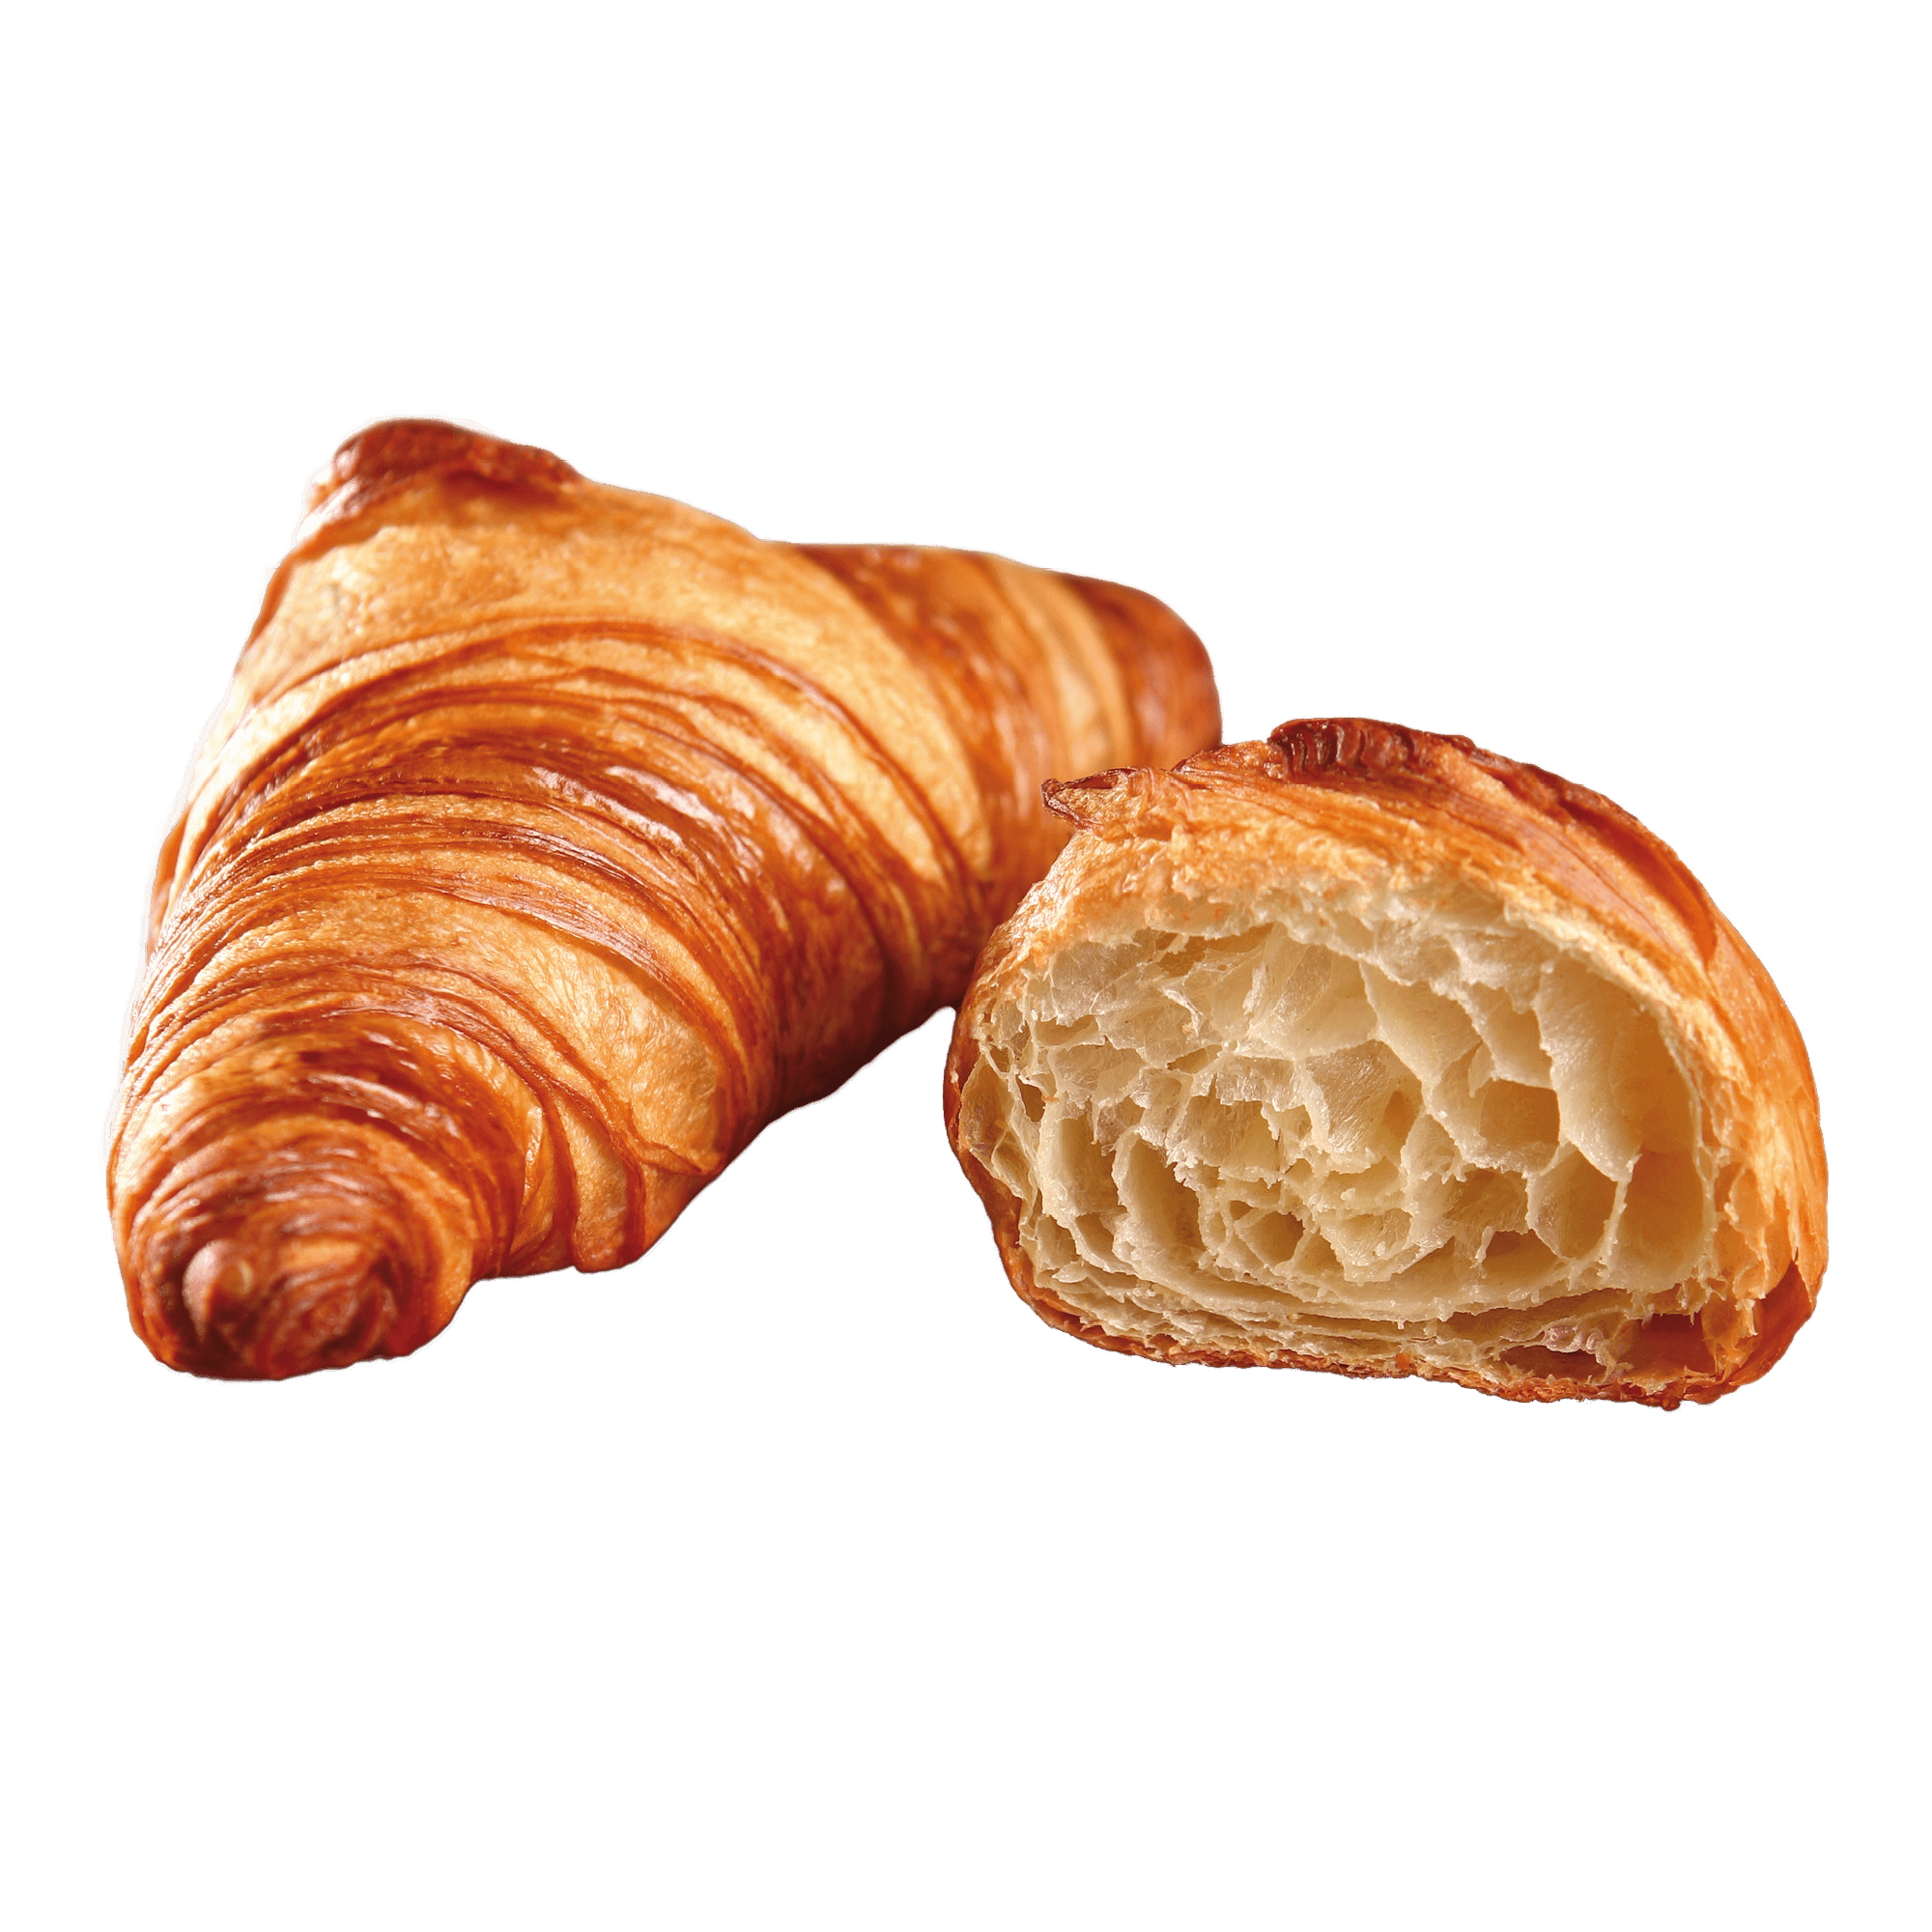 — Butter Croissant Savory Gourmet 2.8 oz Large HT